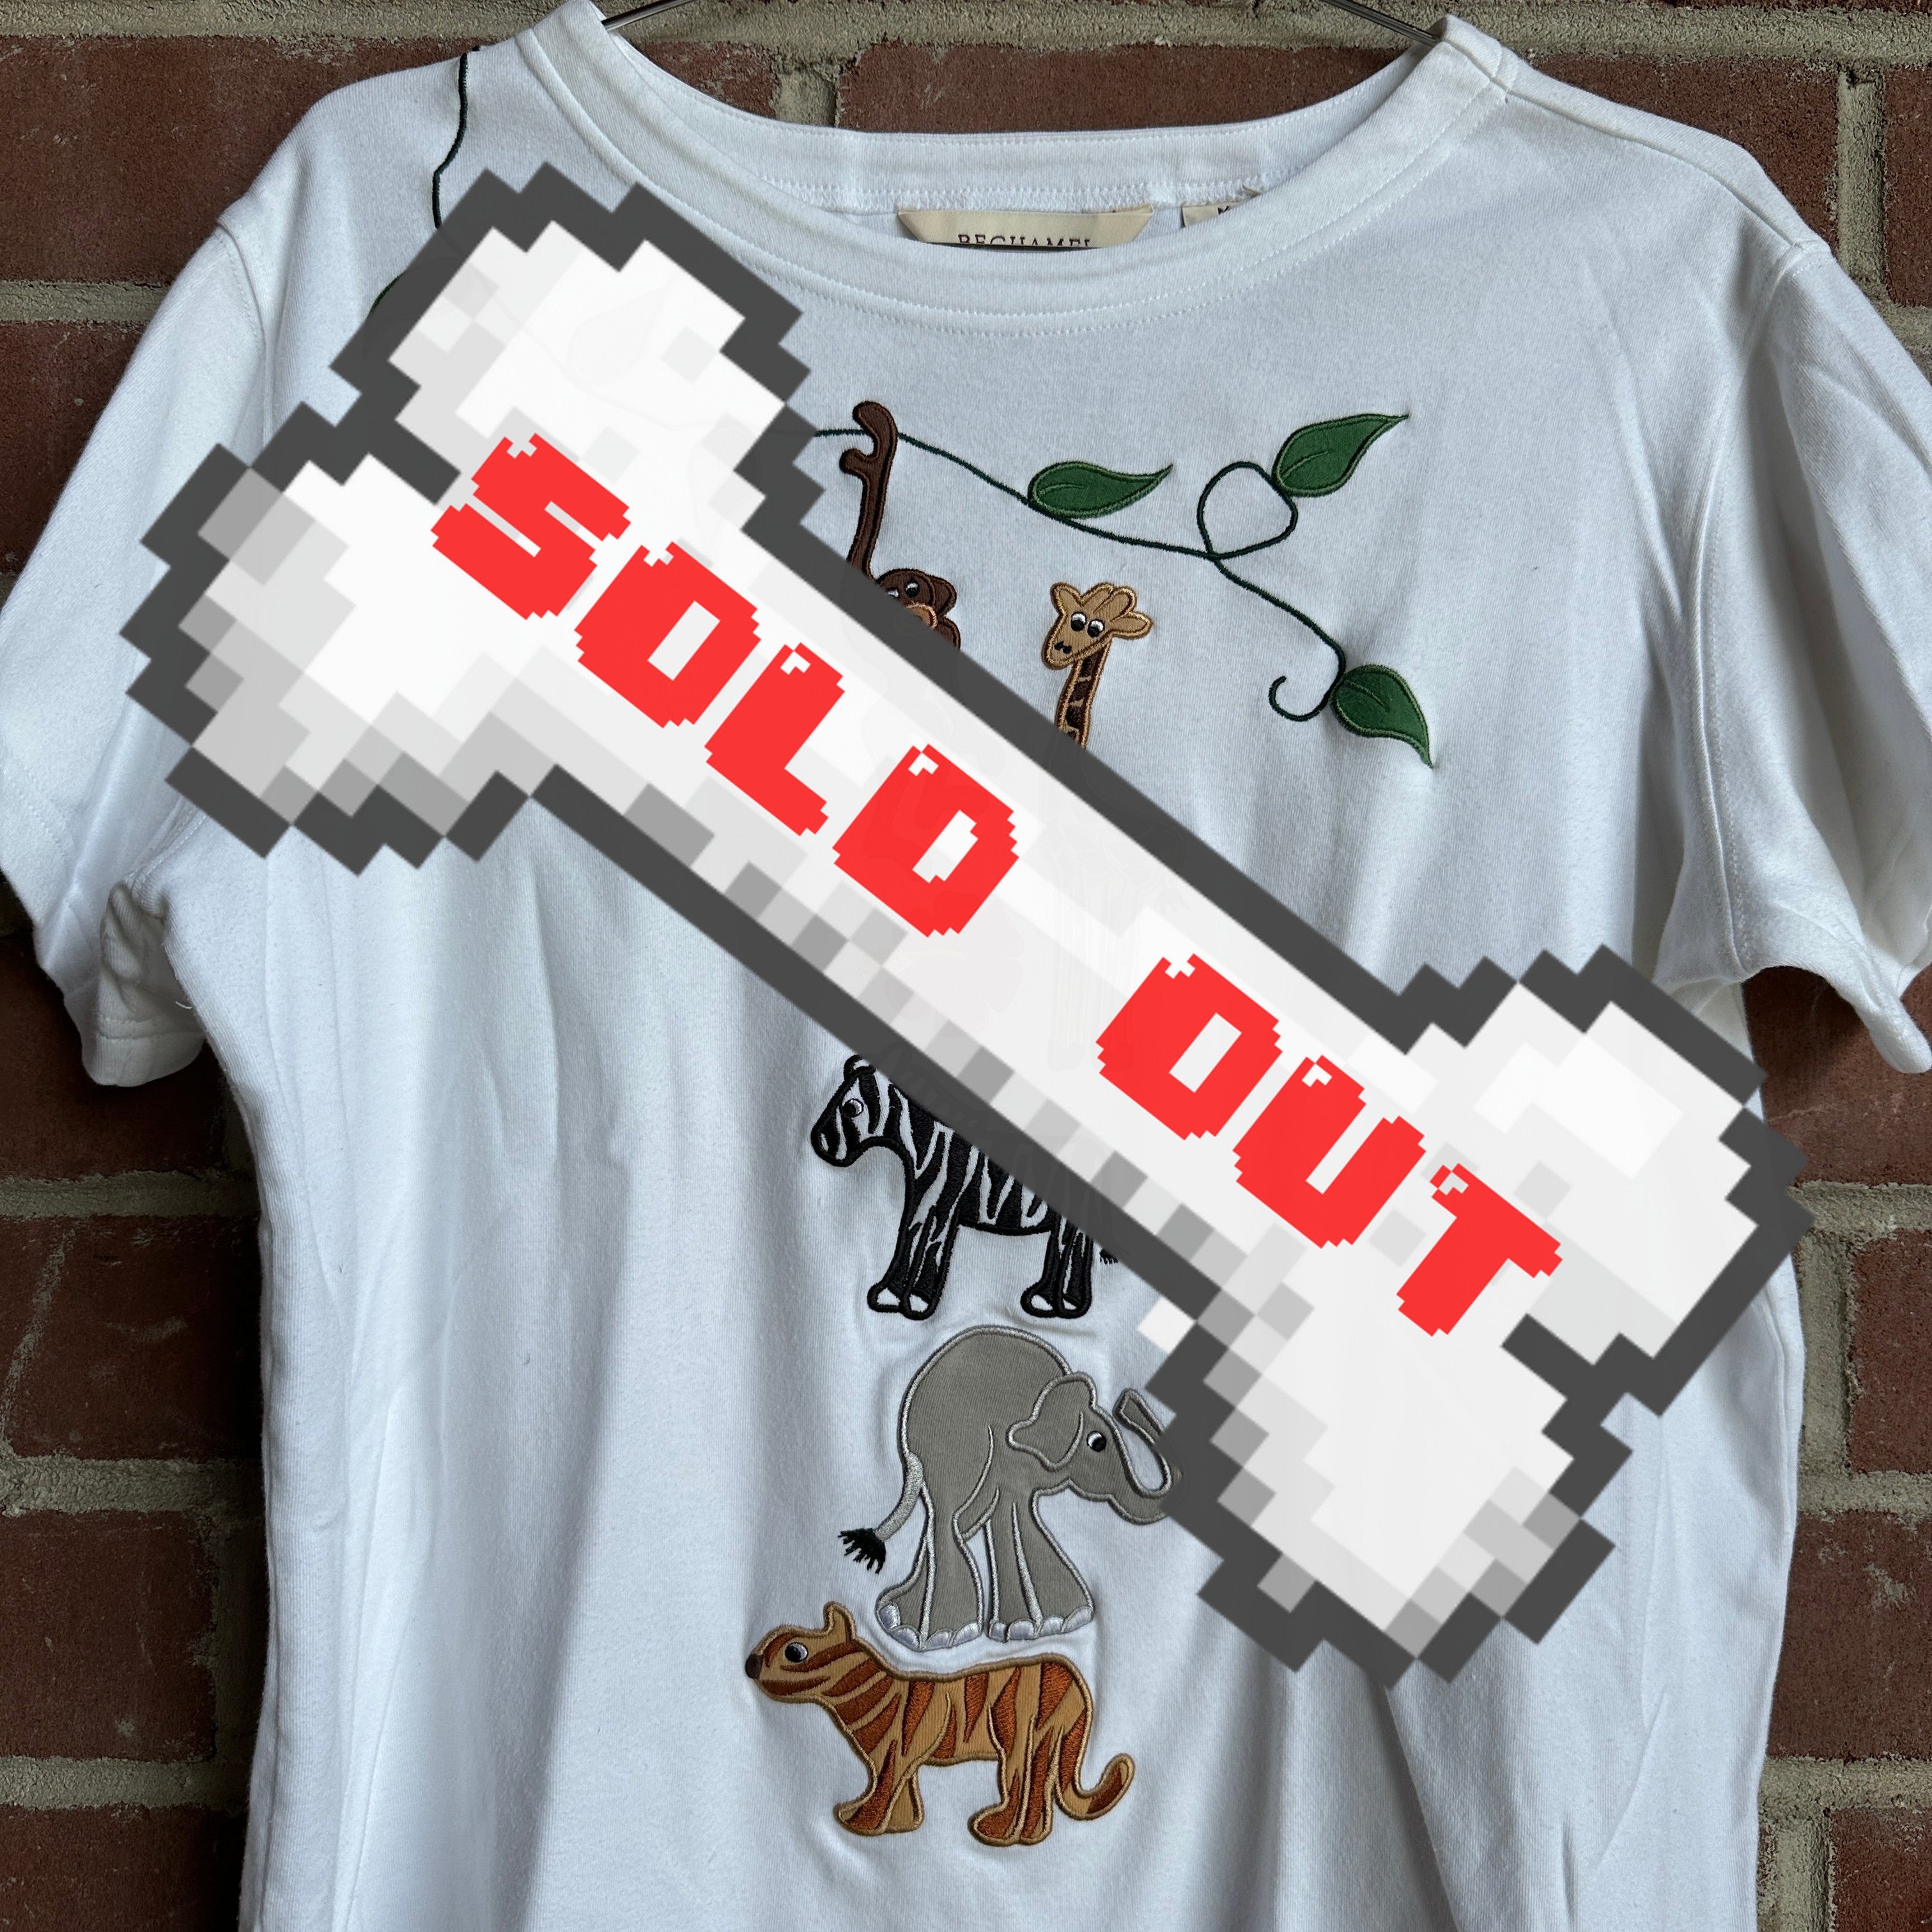 90s White “Bechamel” Jungle Embroidered T-Shirt